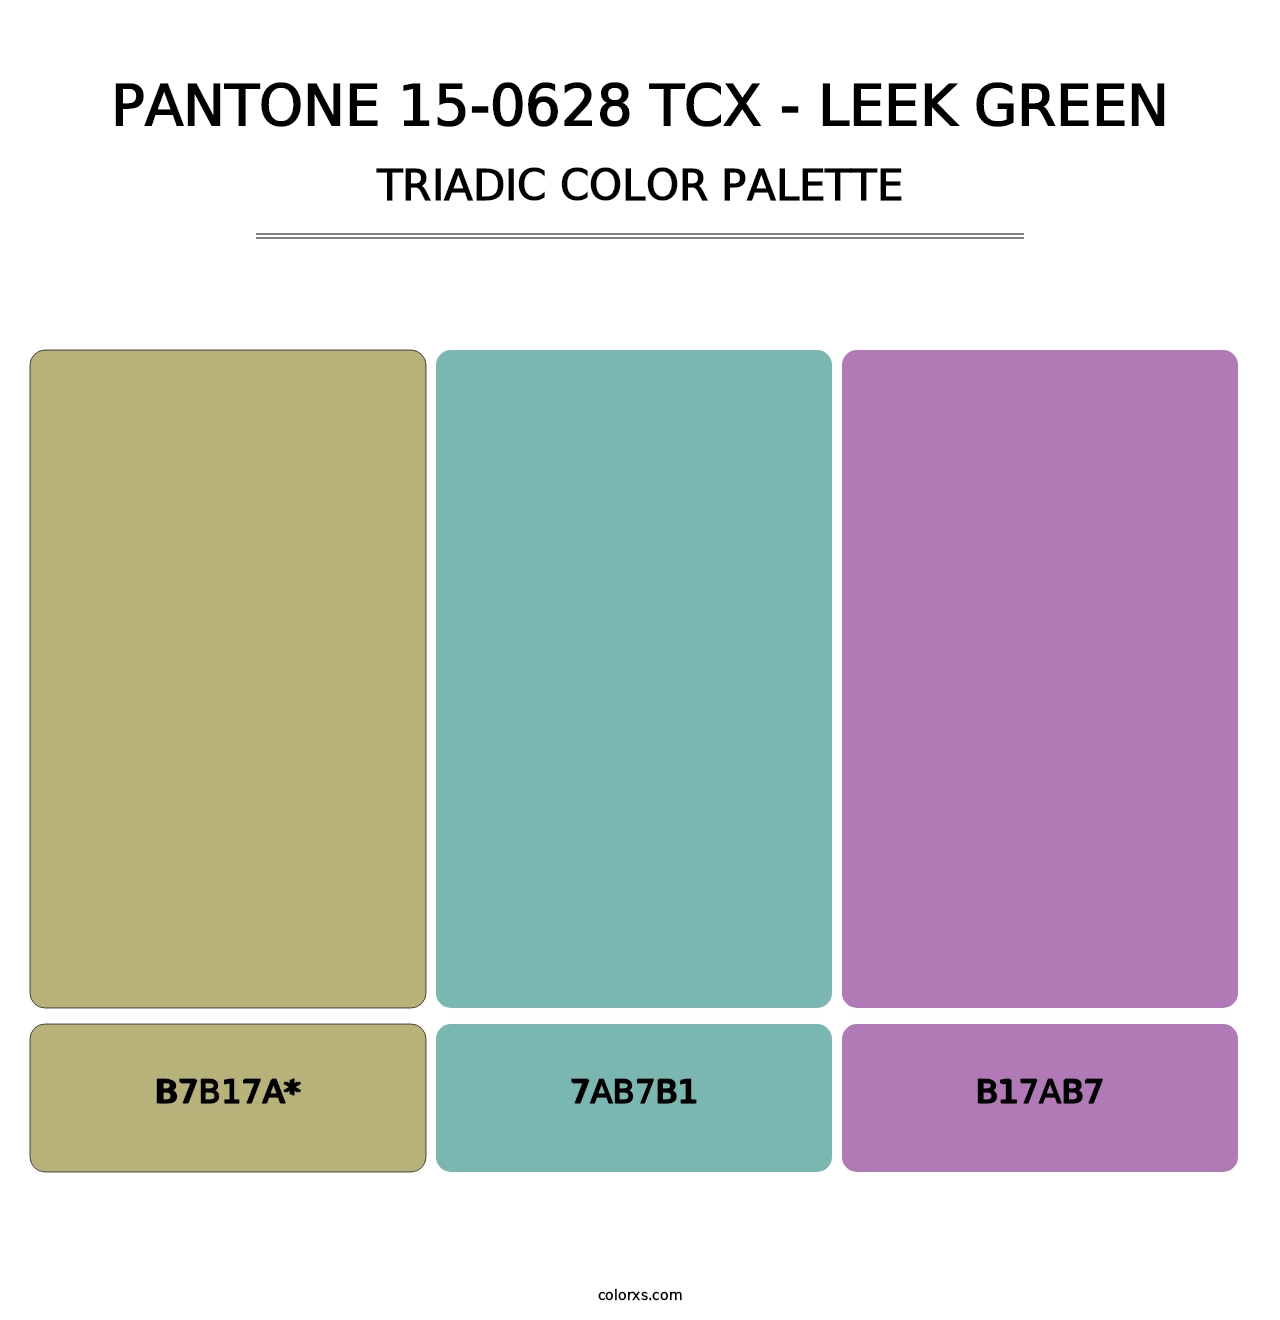 PANTONE 15-0628 TCX - Leek Green - Triadic Color Palette